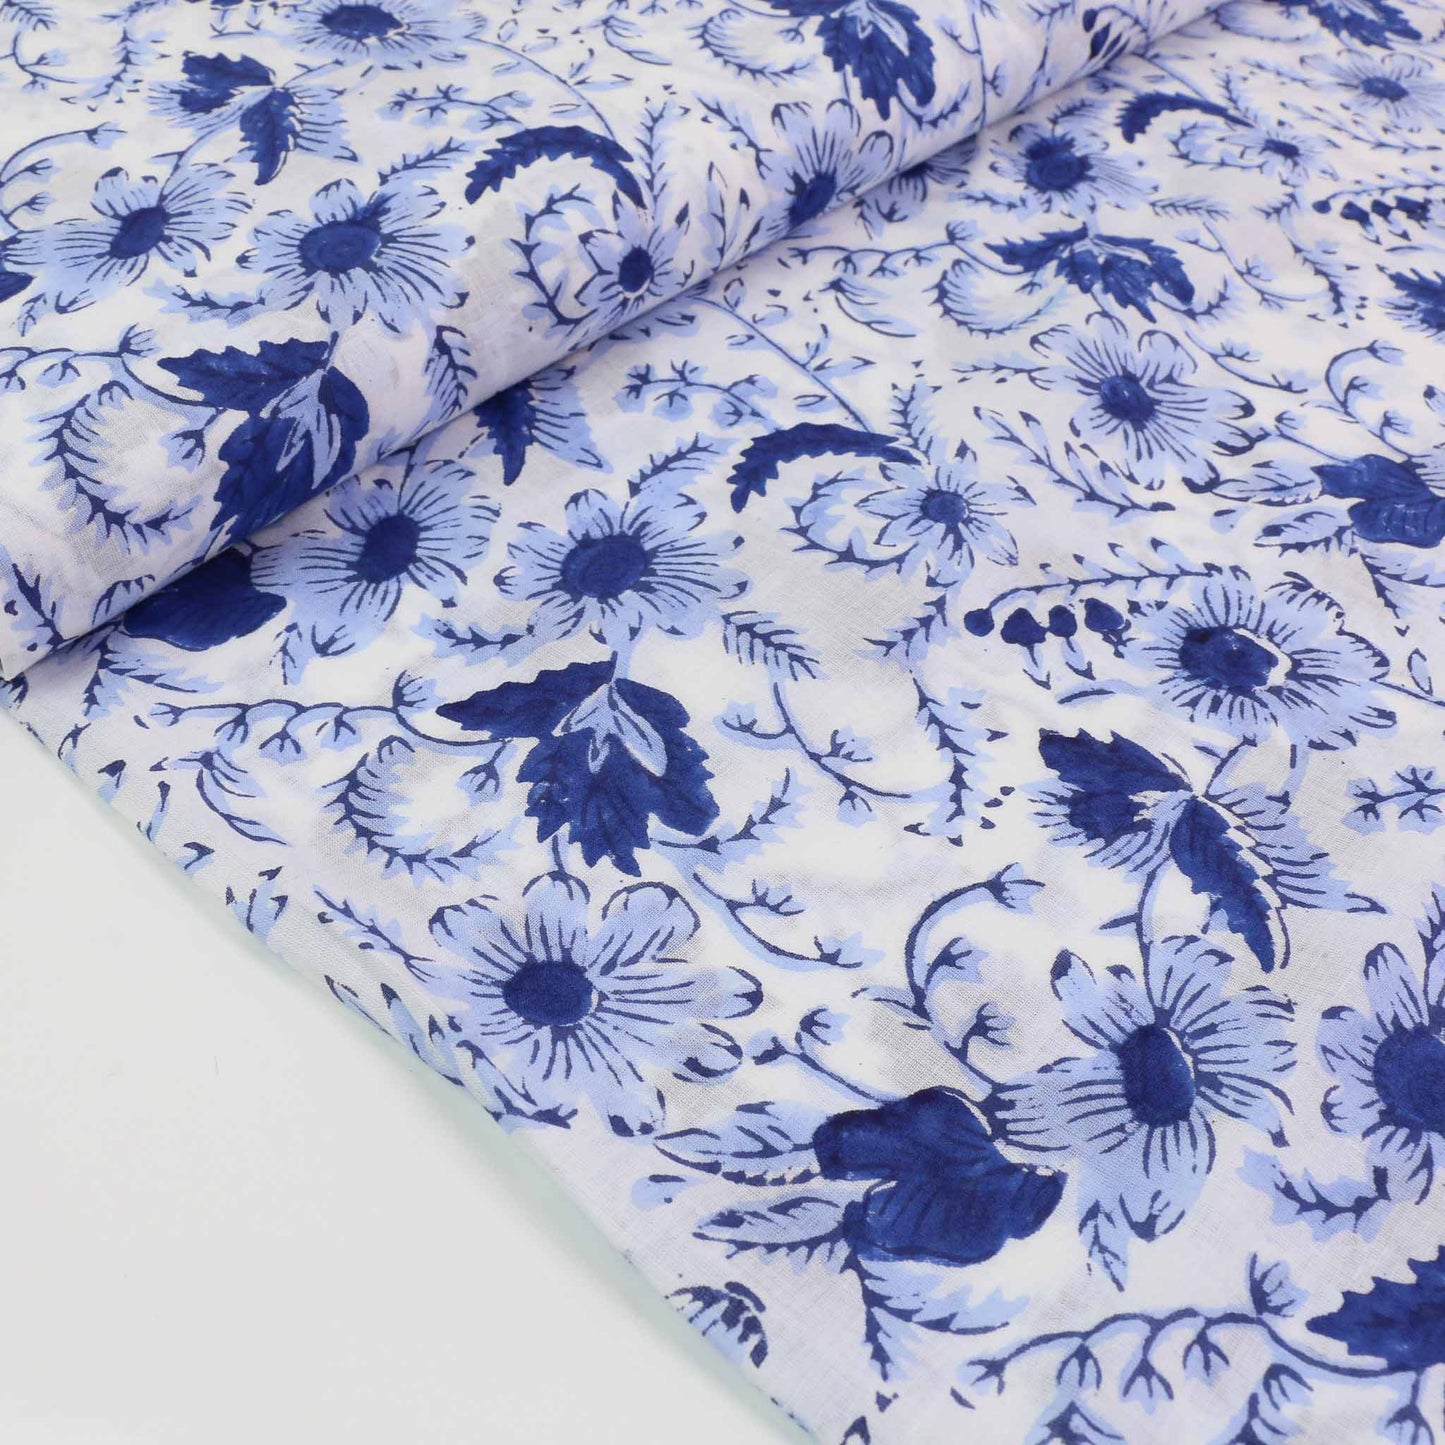 Cotton Voile - Hand block print - White, lilac